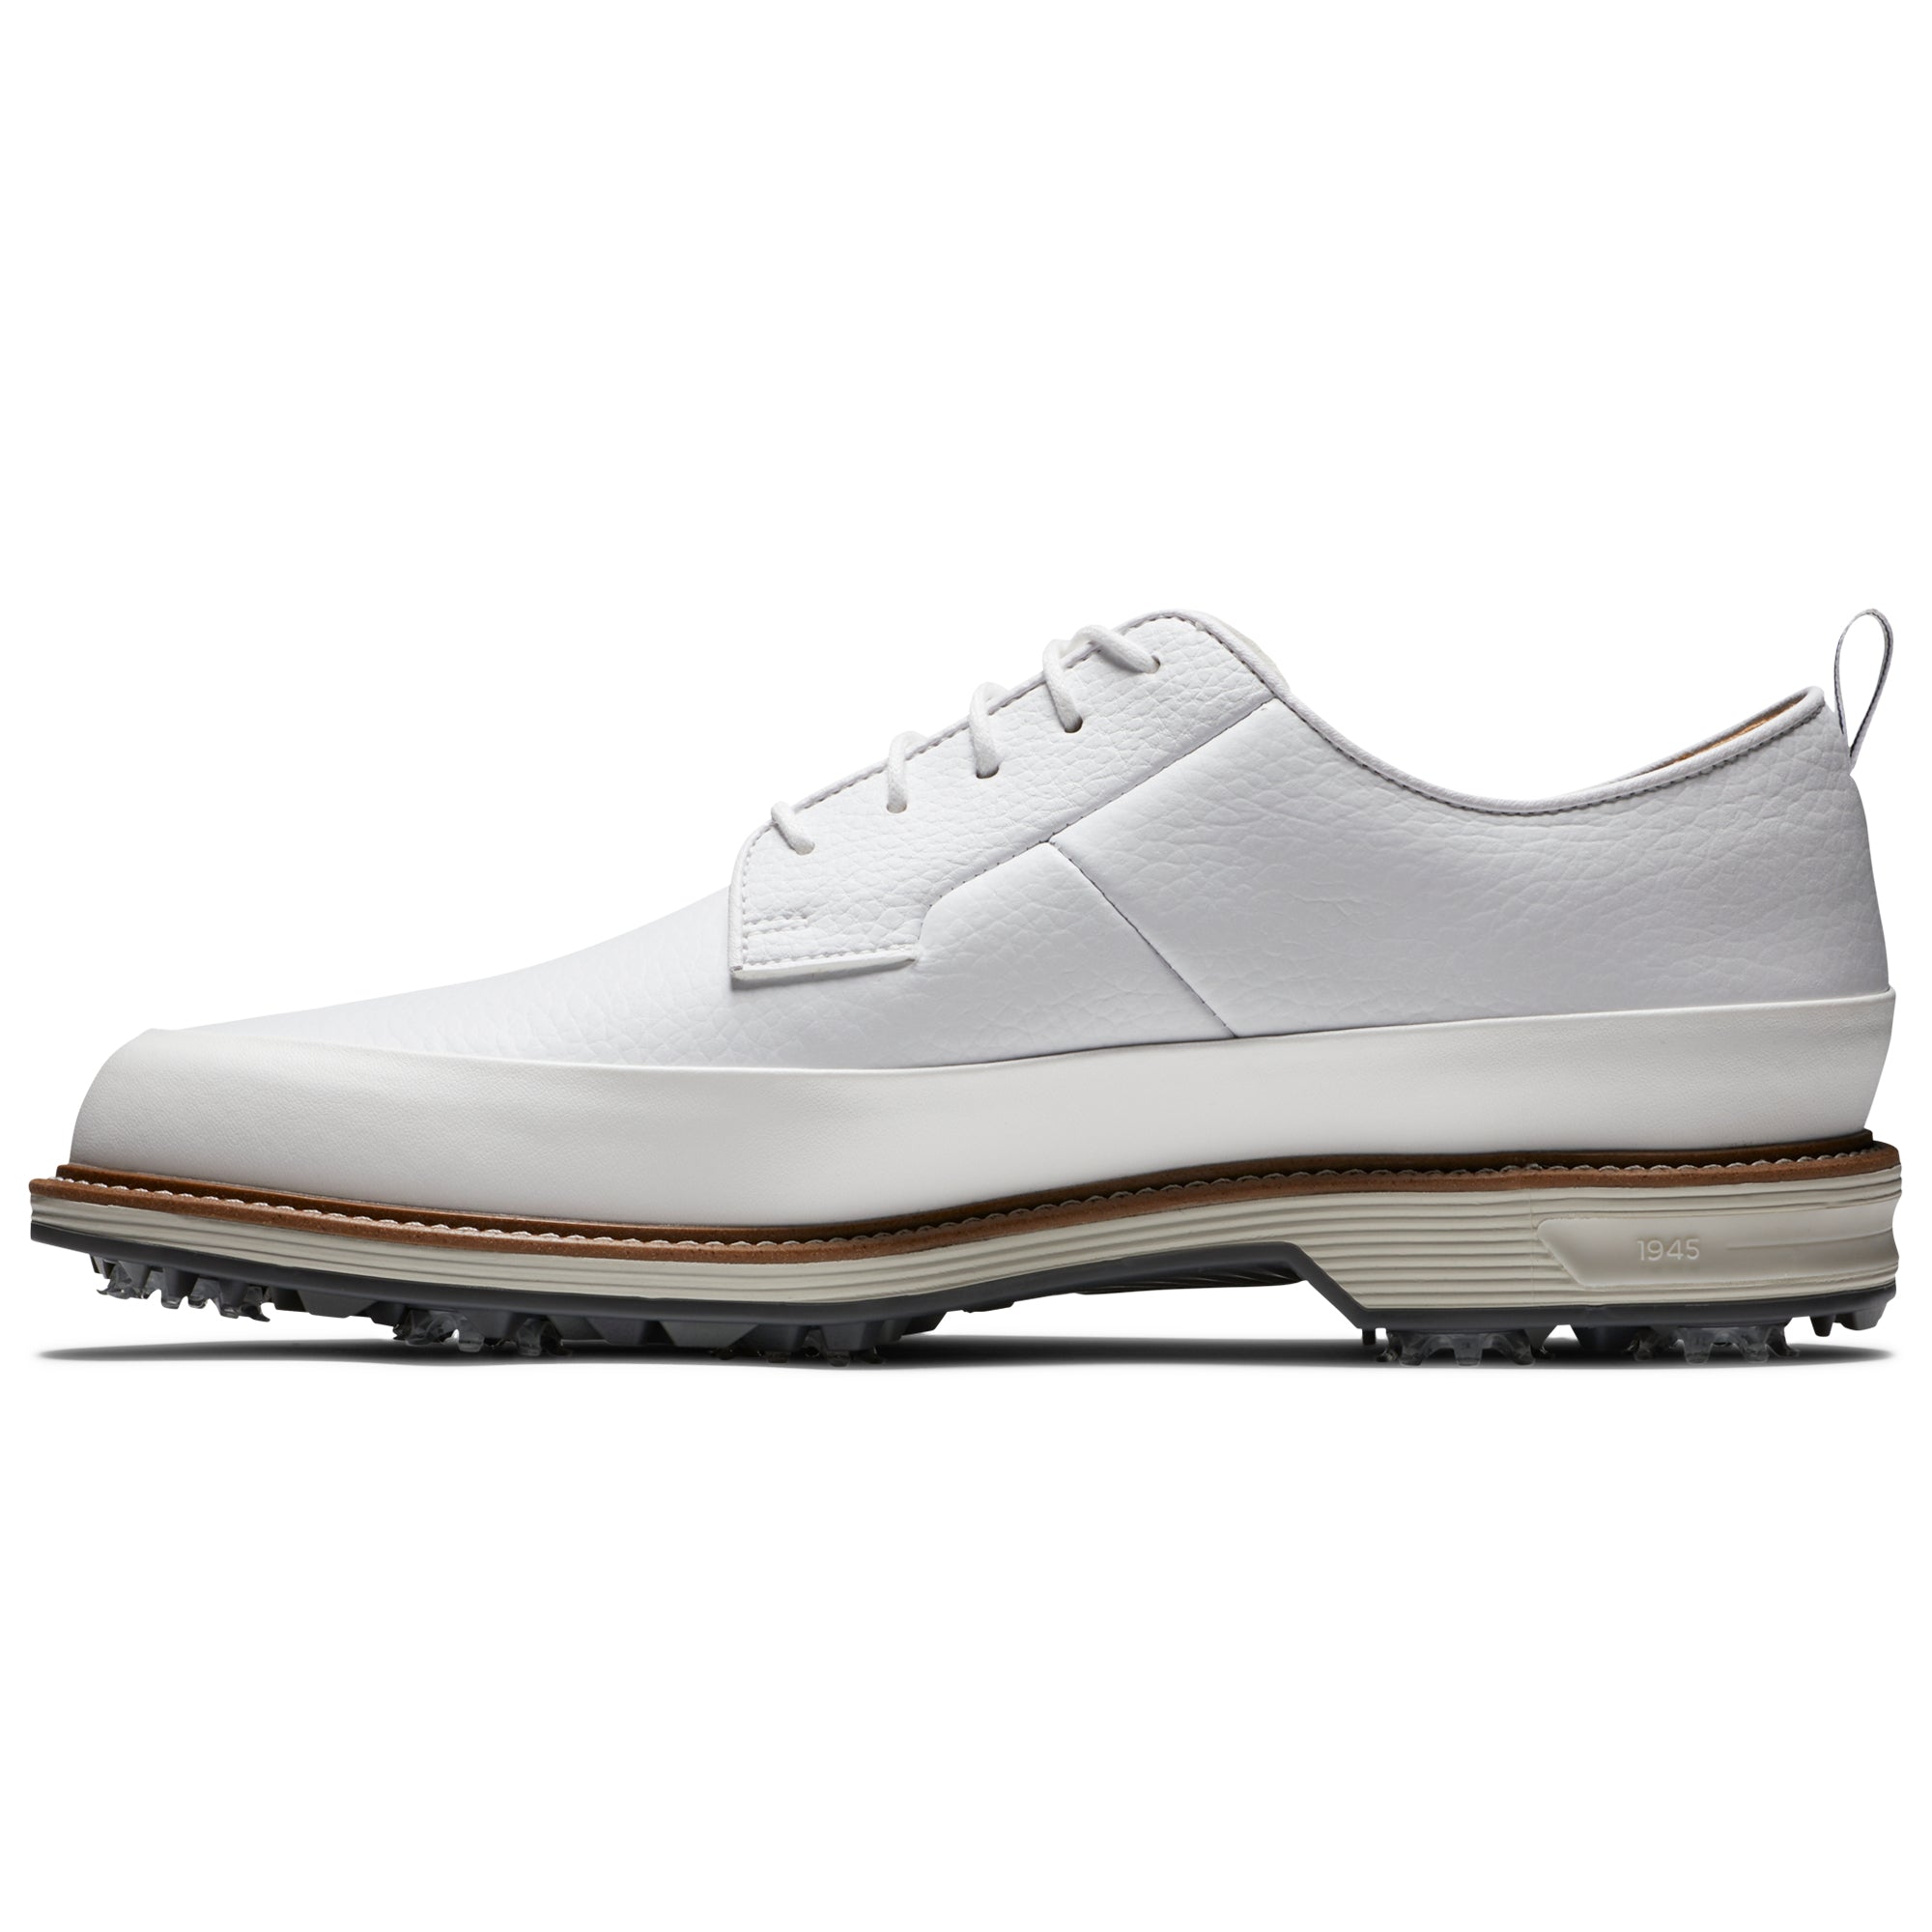 footjoy-premiere-series-field-lx-golf-shoes-54394-white-cool-white-grey